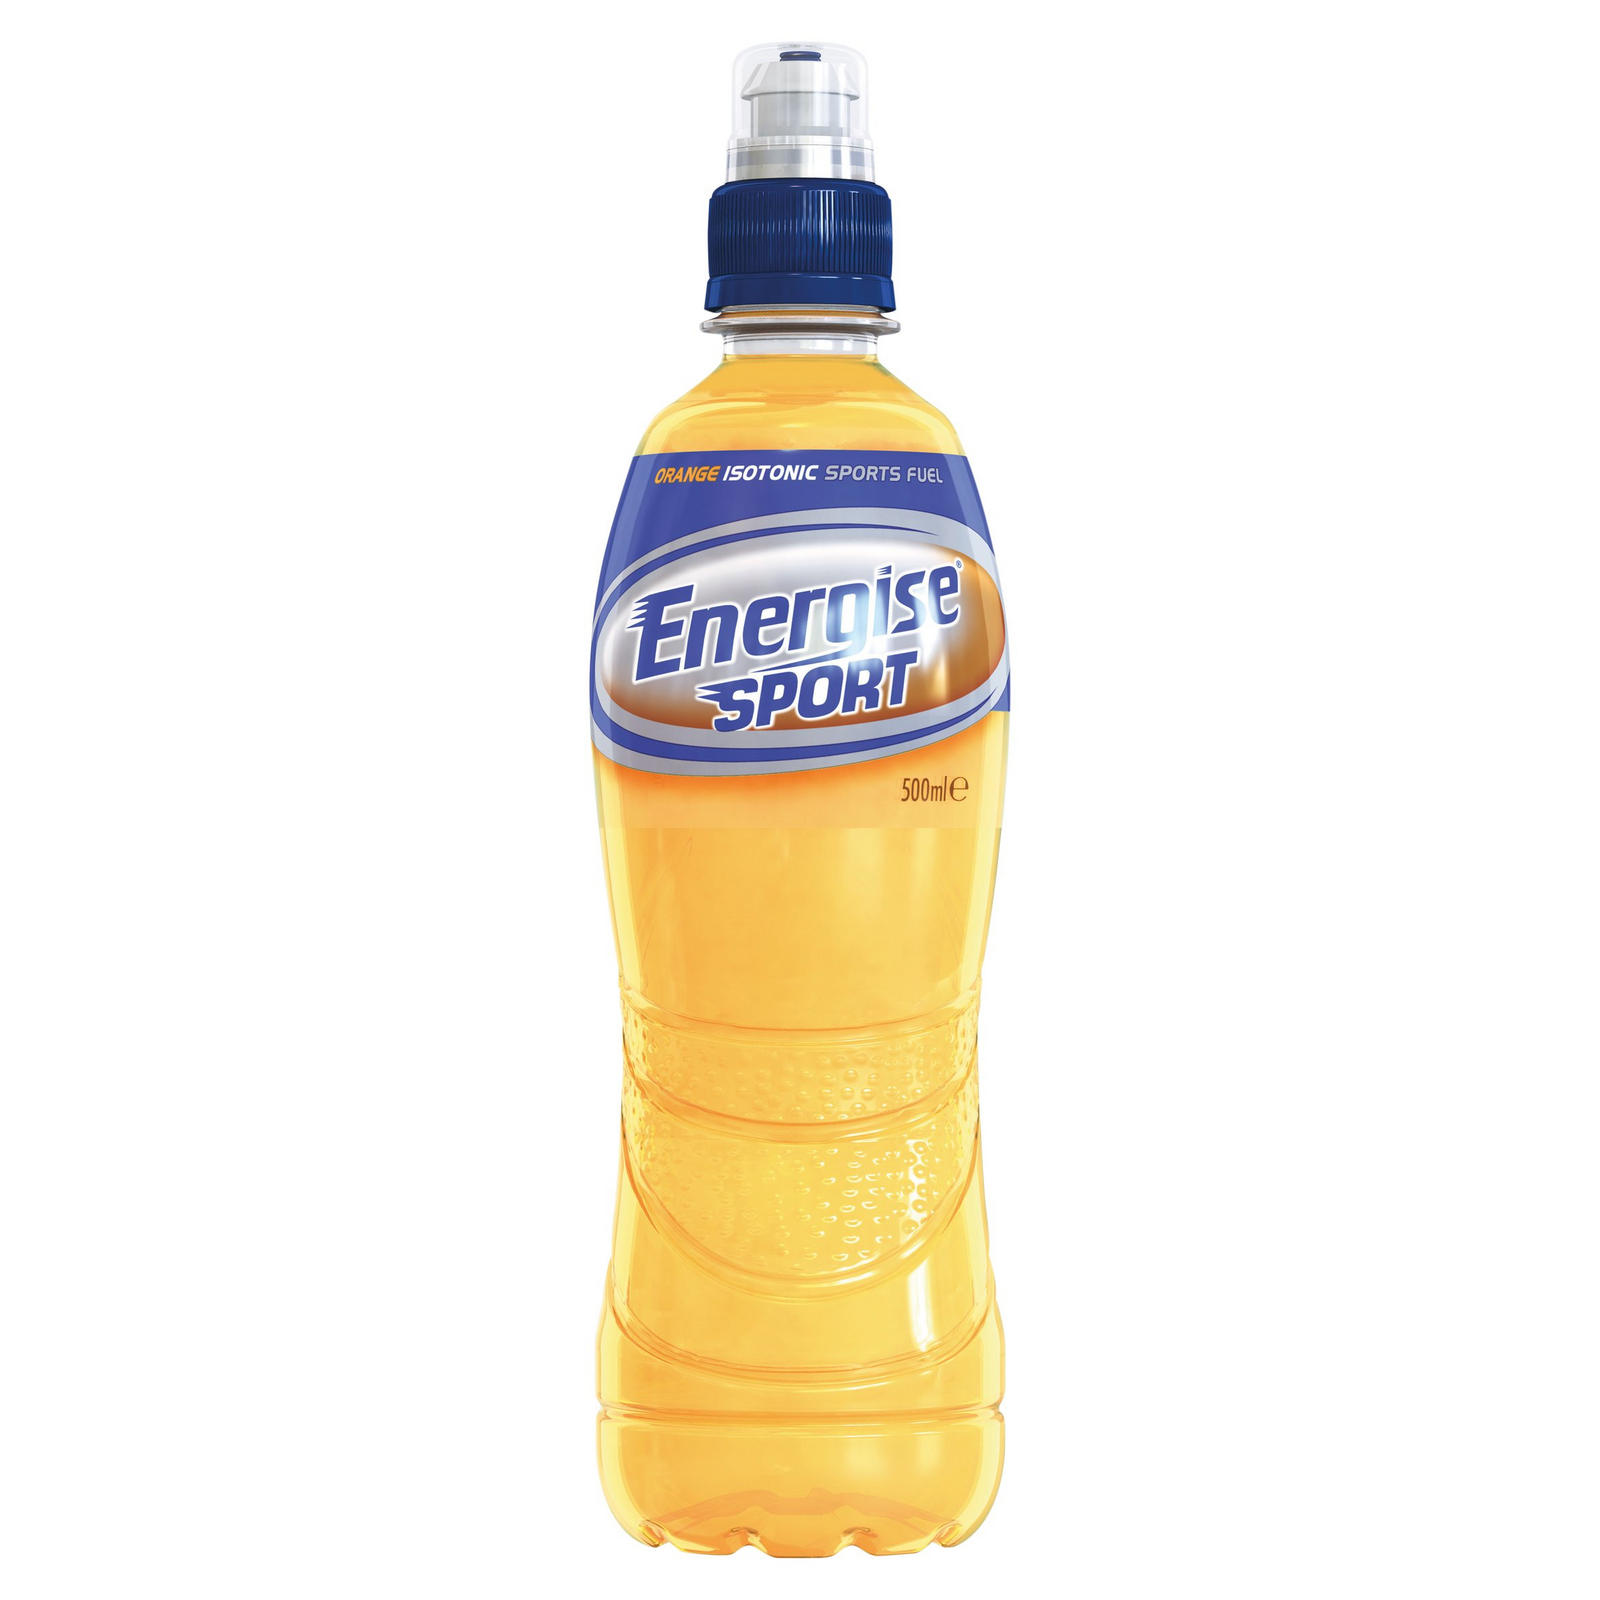 Energise Sport Orange Isotonic Sports Fuel 500ml | Sports ...
